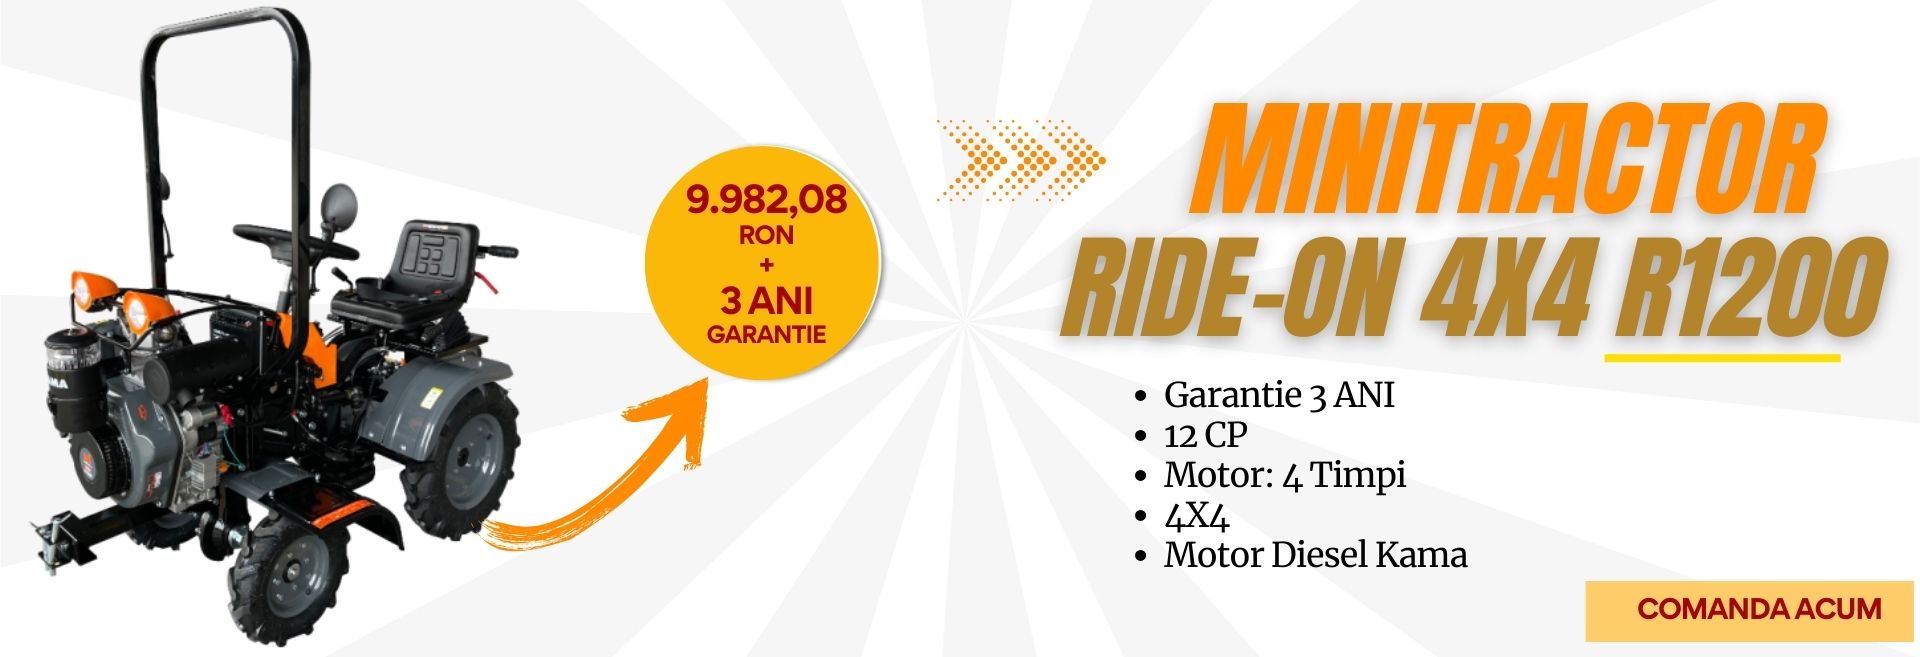 Minitractor Ride-On 4x4 R1200